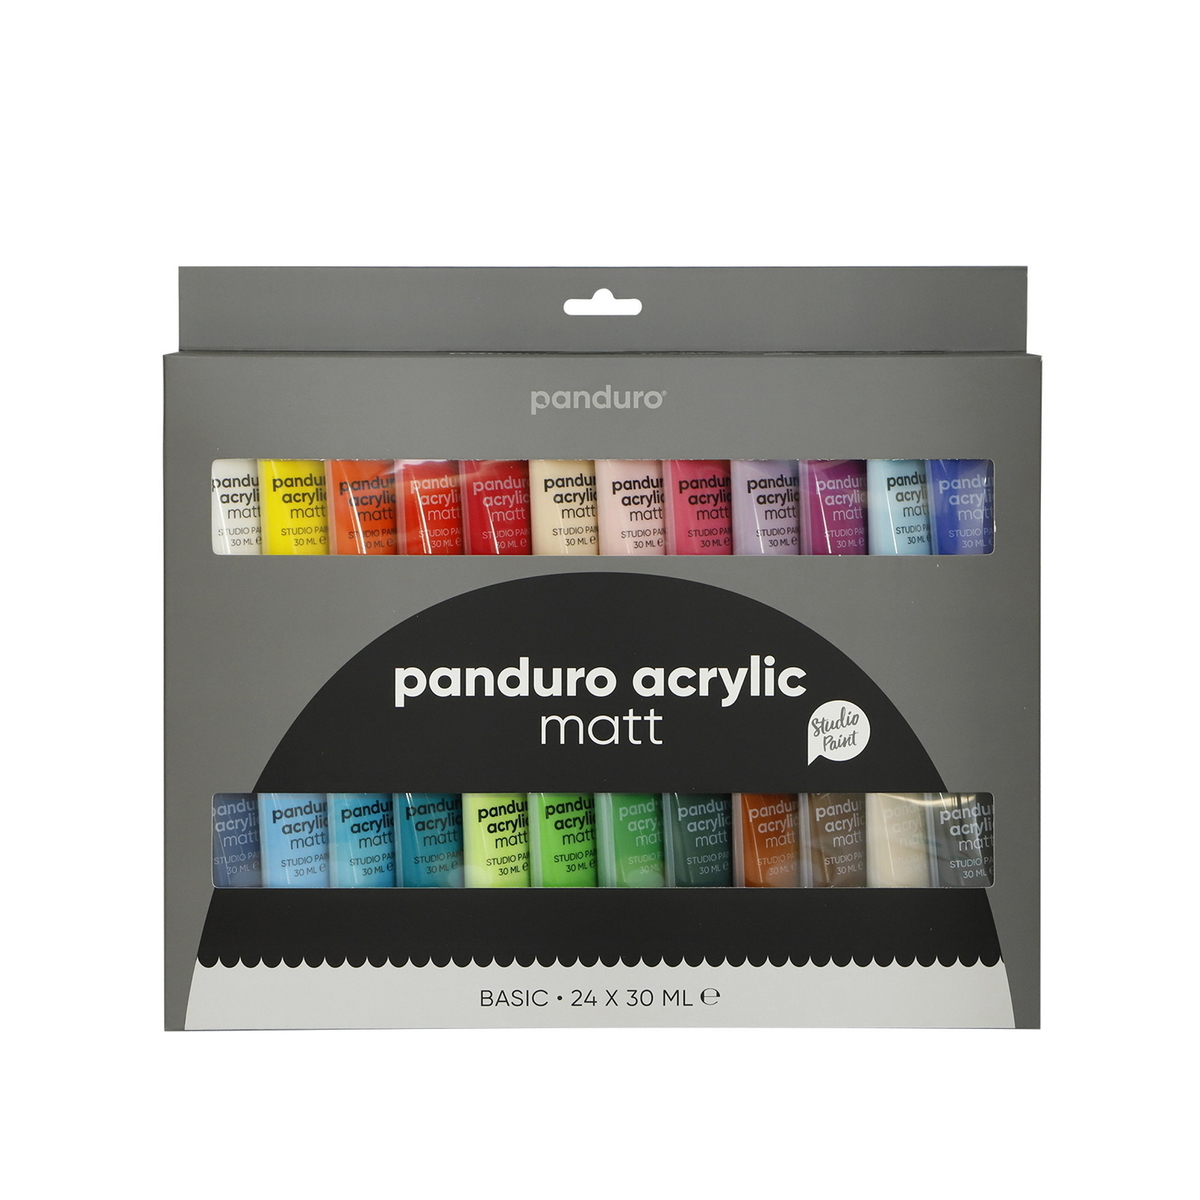 Skygge Fredag Senatet Panduro Acrylic matt set – 24×30 ml med matte akrylfarver